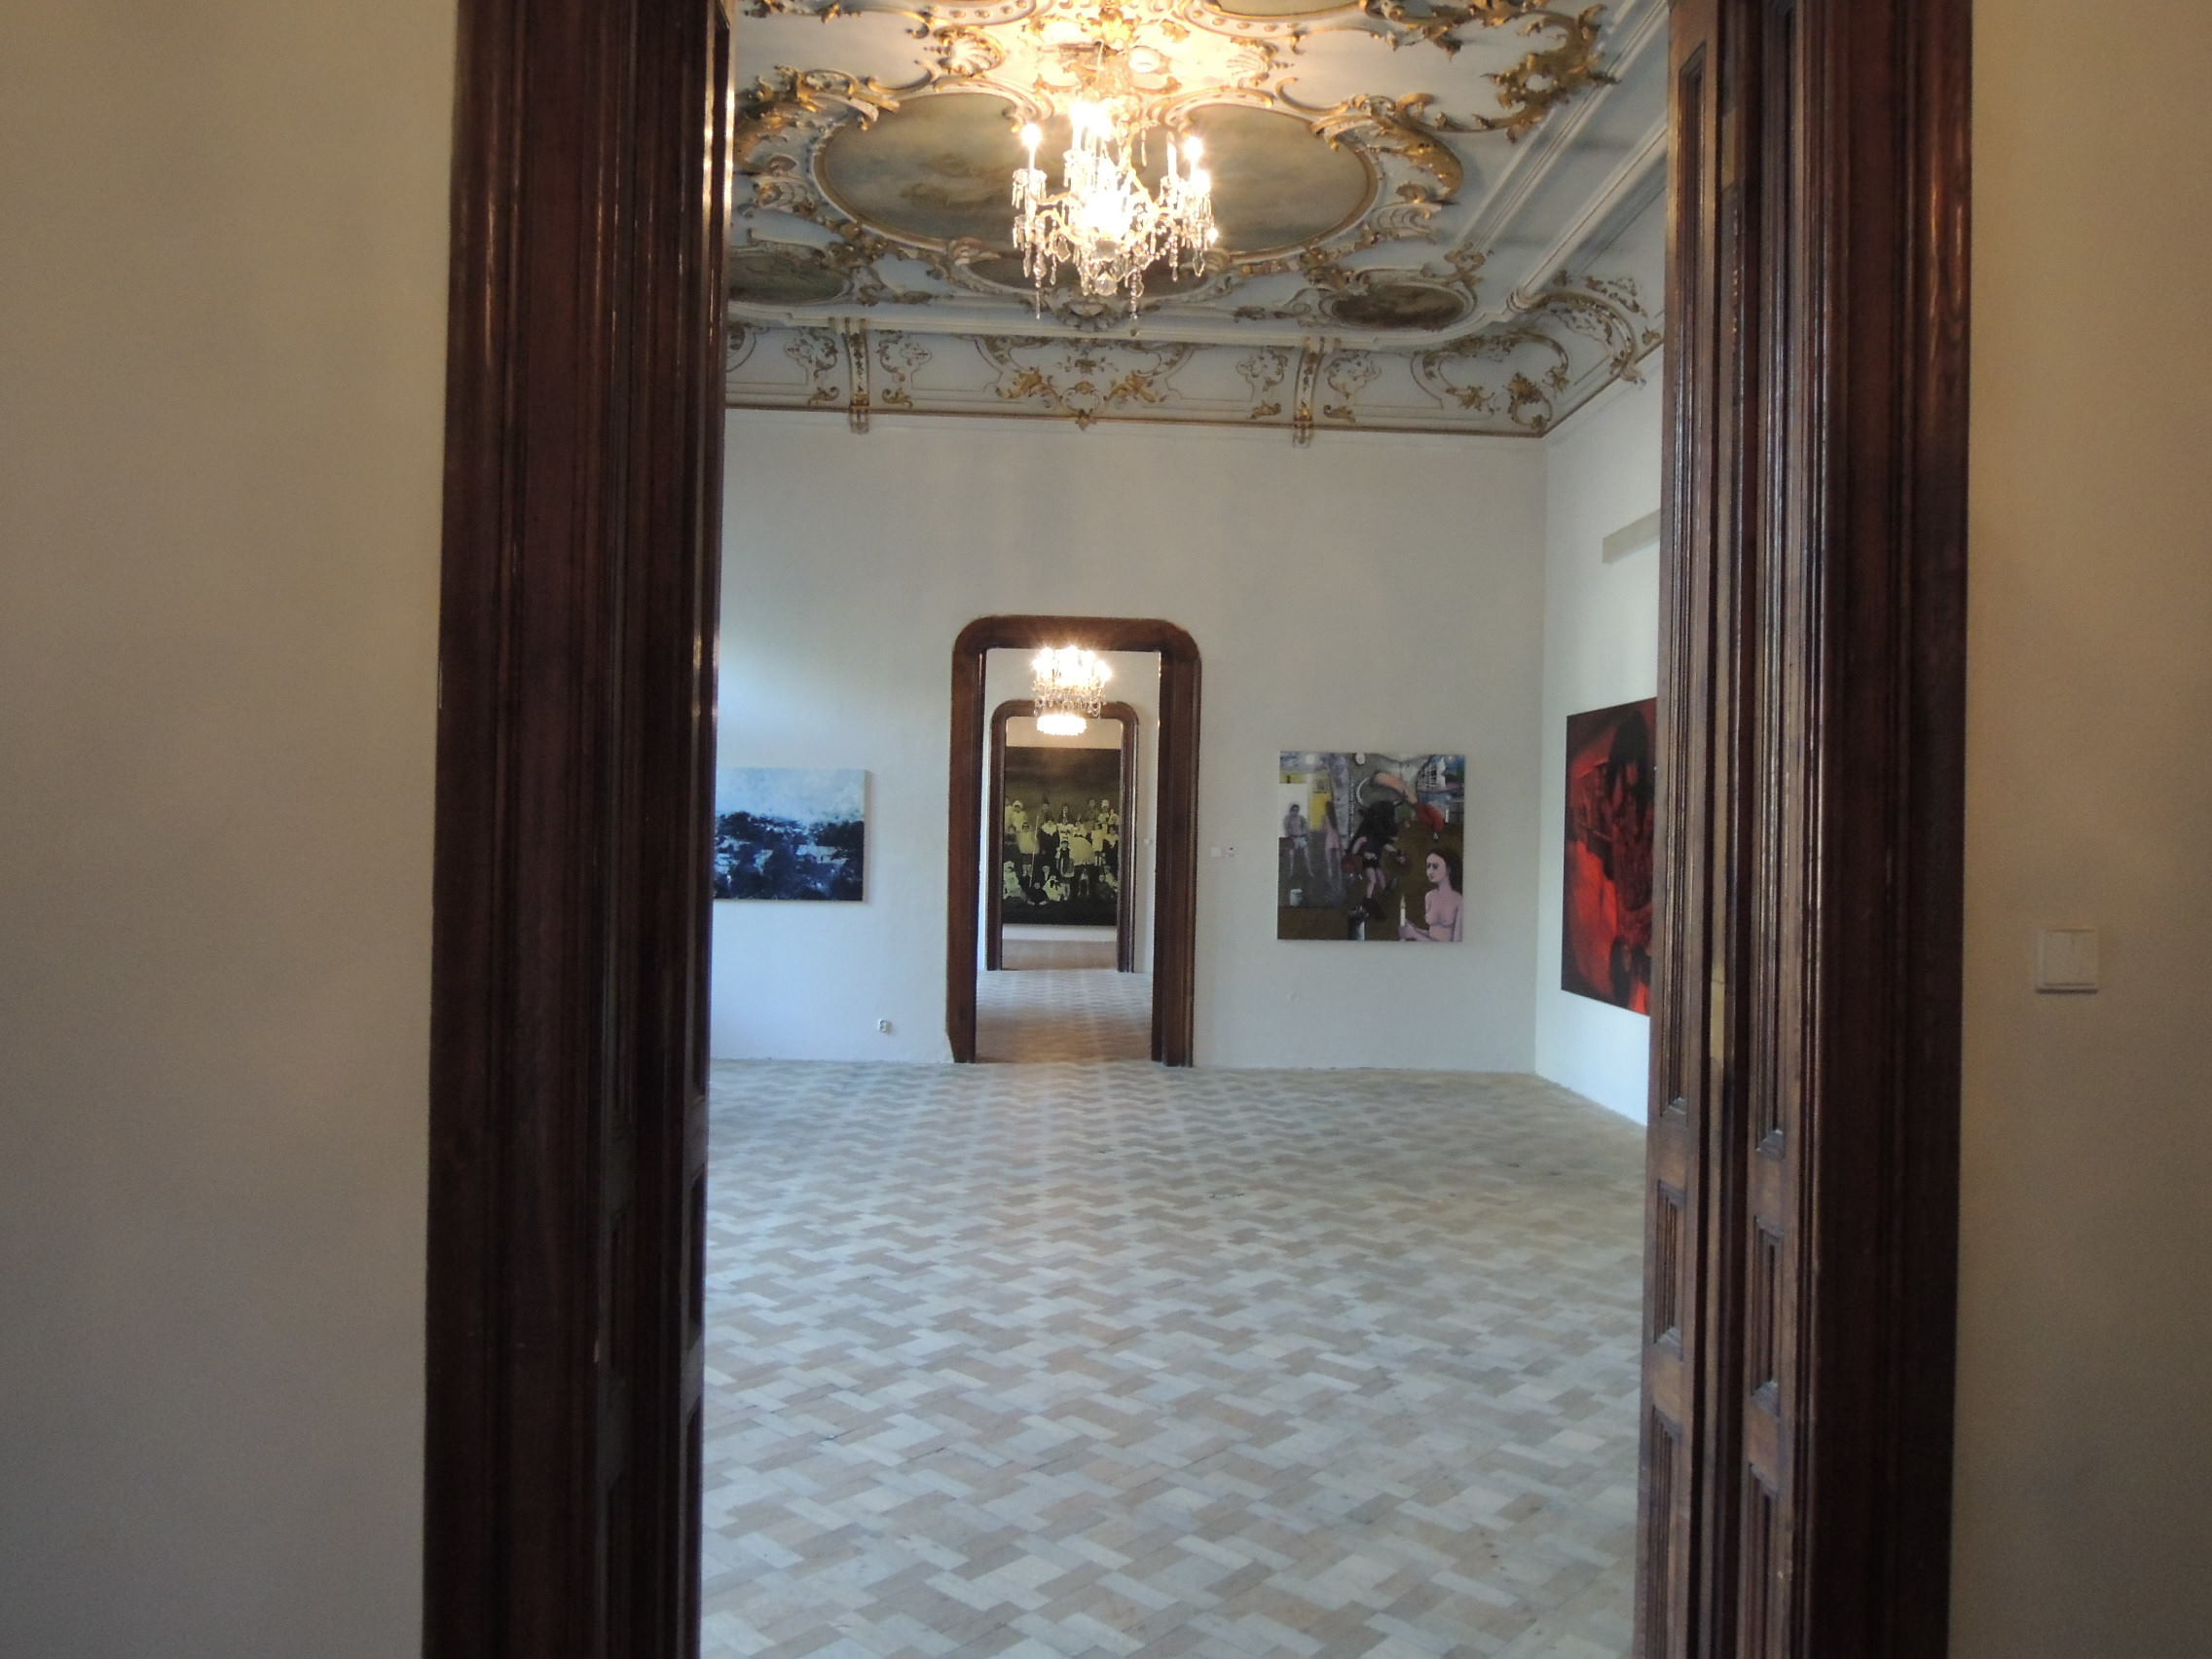   La Belle Peinture 2 , Bratislava (SK), Pisztory Palace.&nbsp;Curators : Eva Hober and Ivan Jançar 